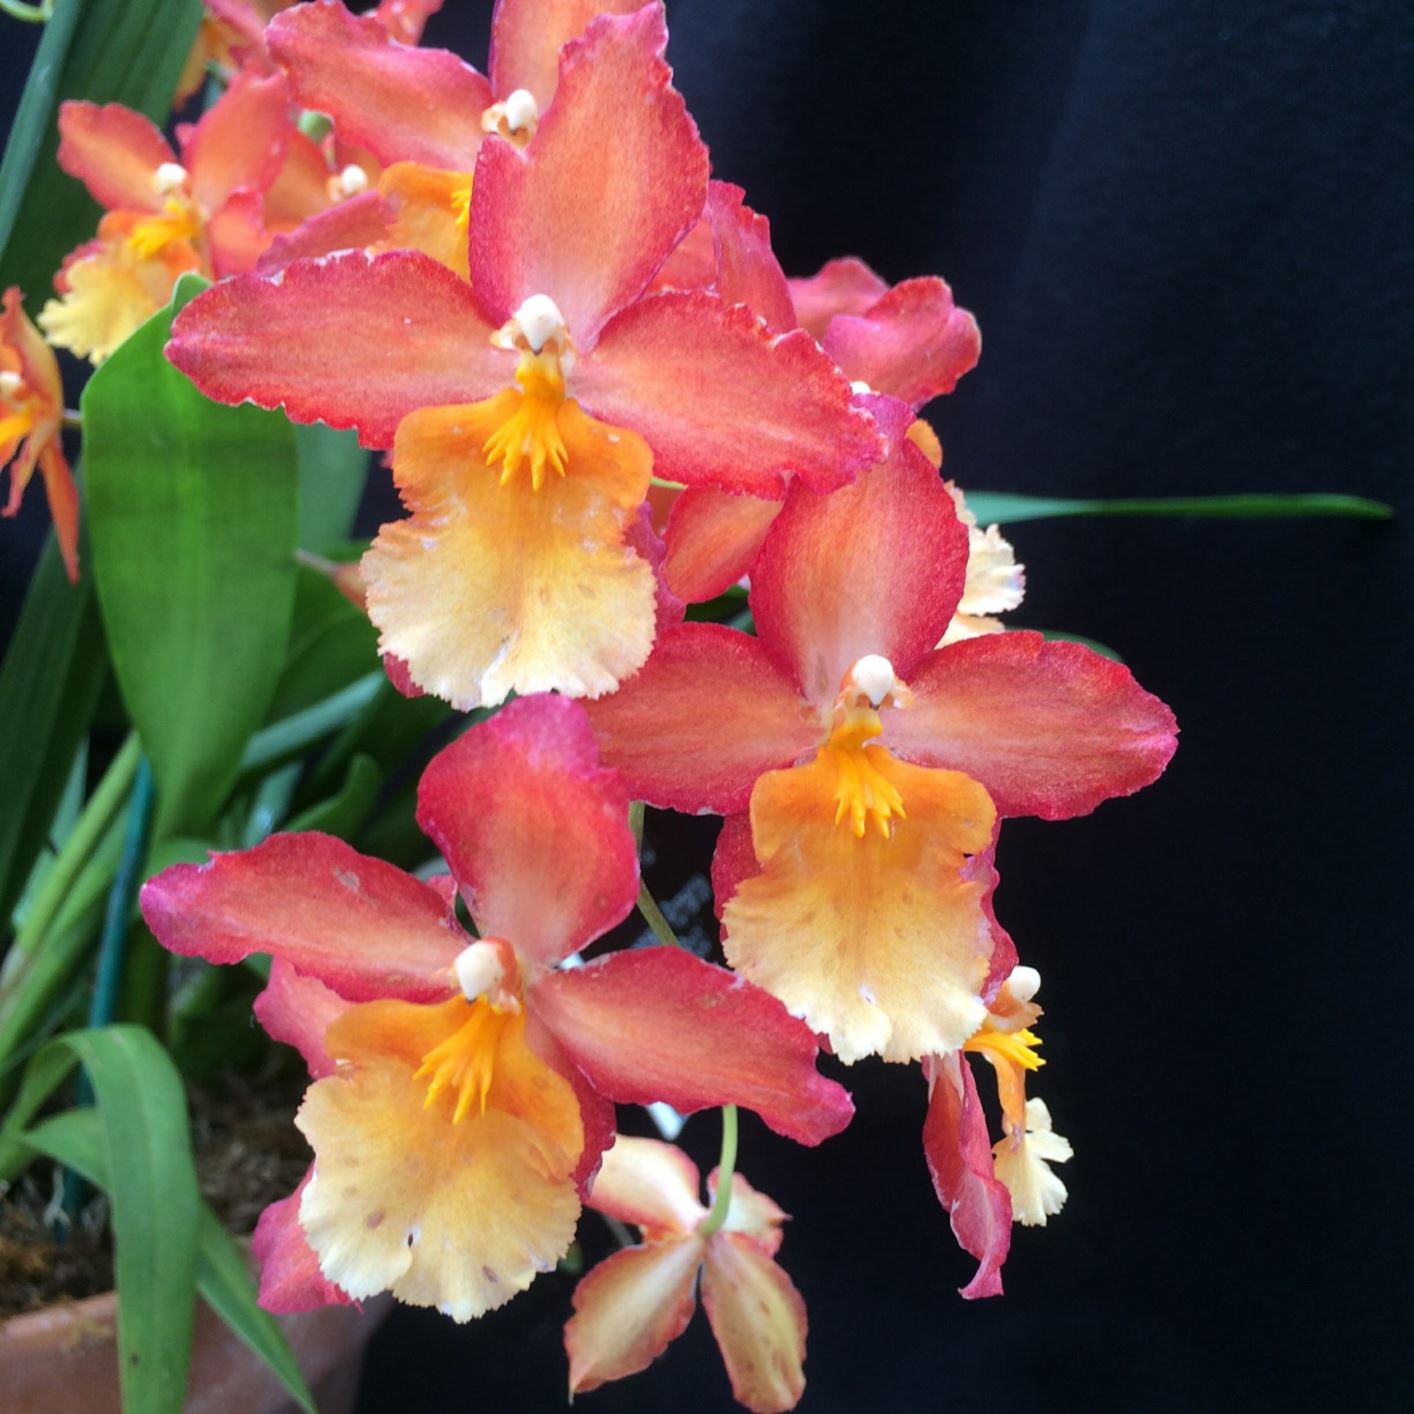 Oncostele Romance 'Oro Rojo' - orchid